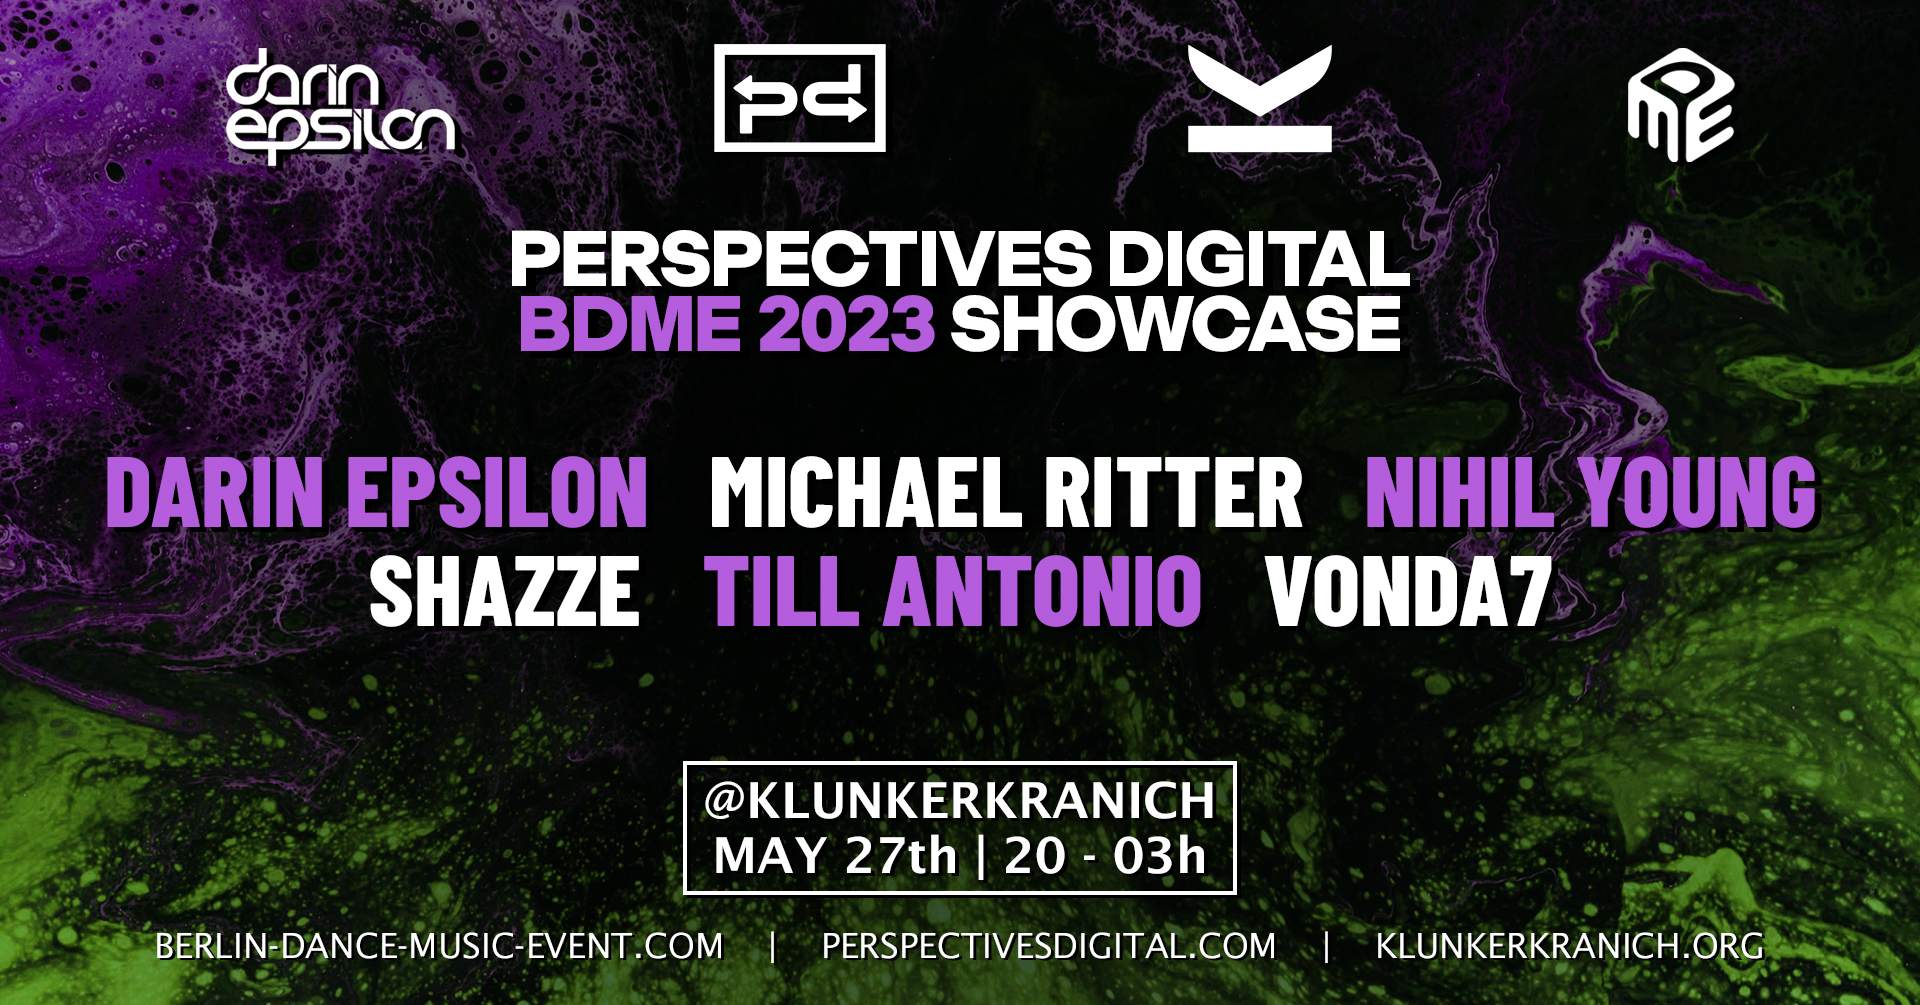 Darin Epsilon presents Perspectives Digital BDME Showcase - フライヤー表